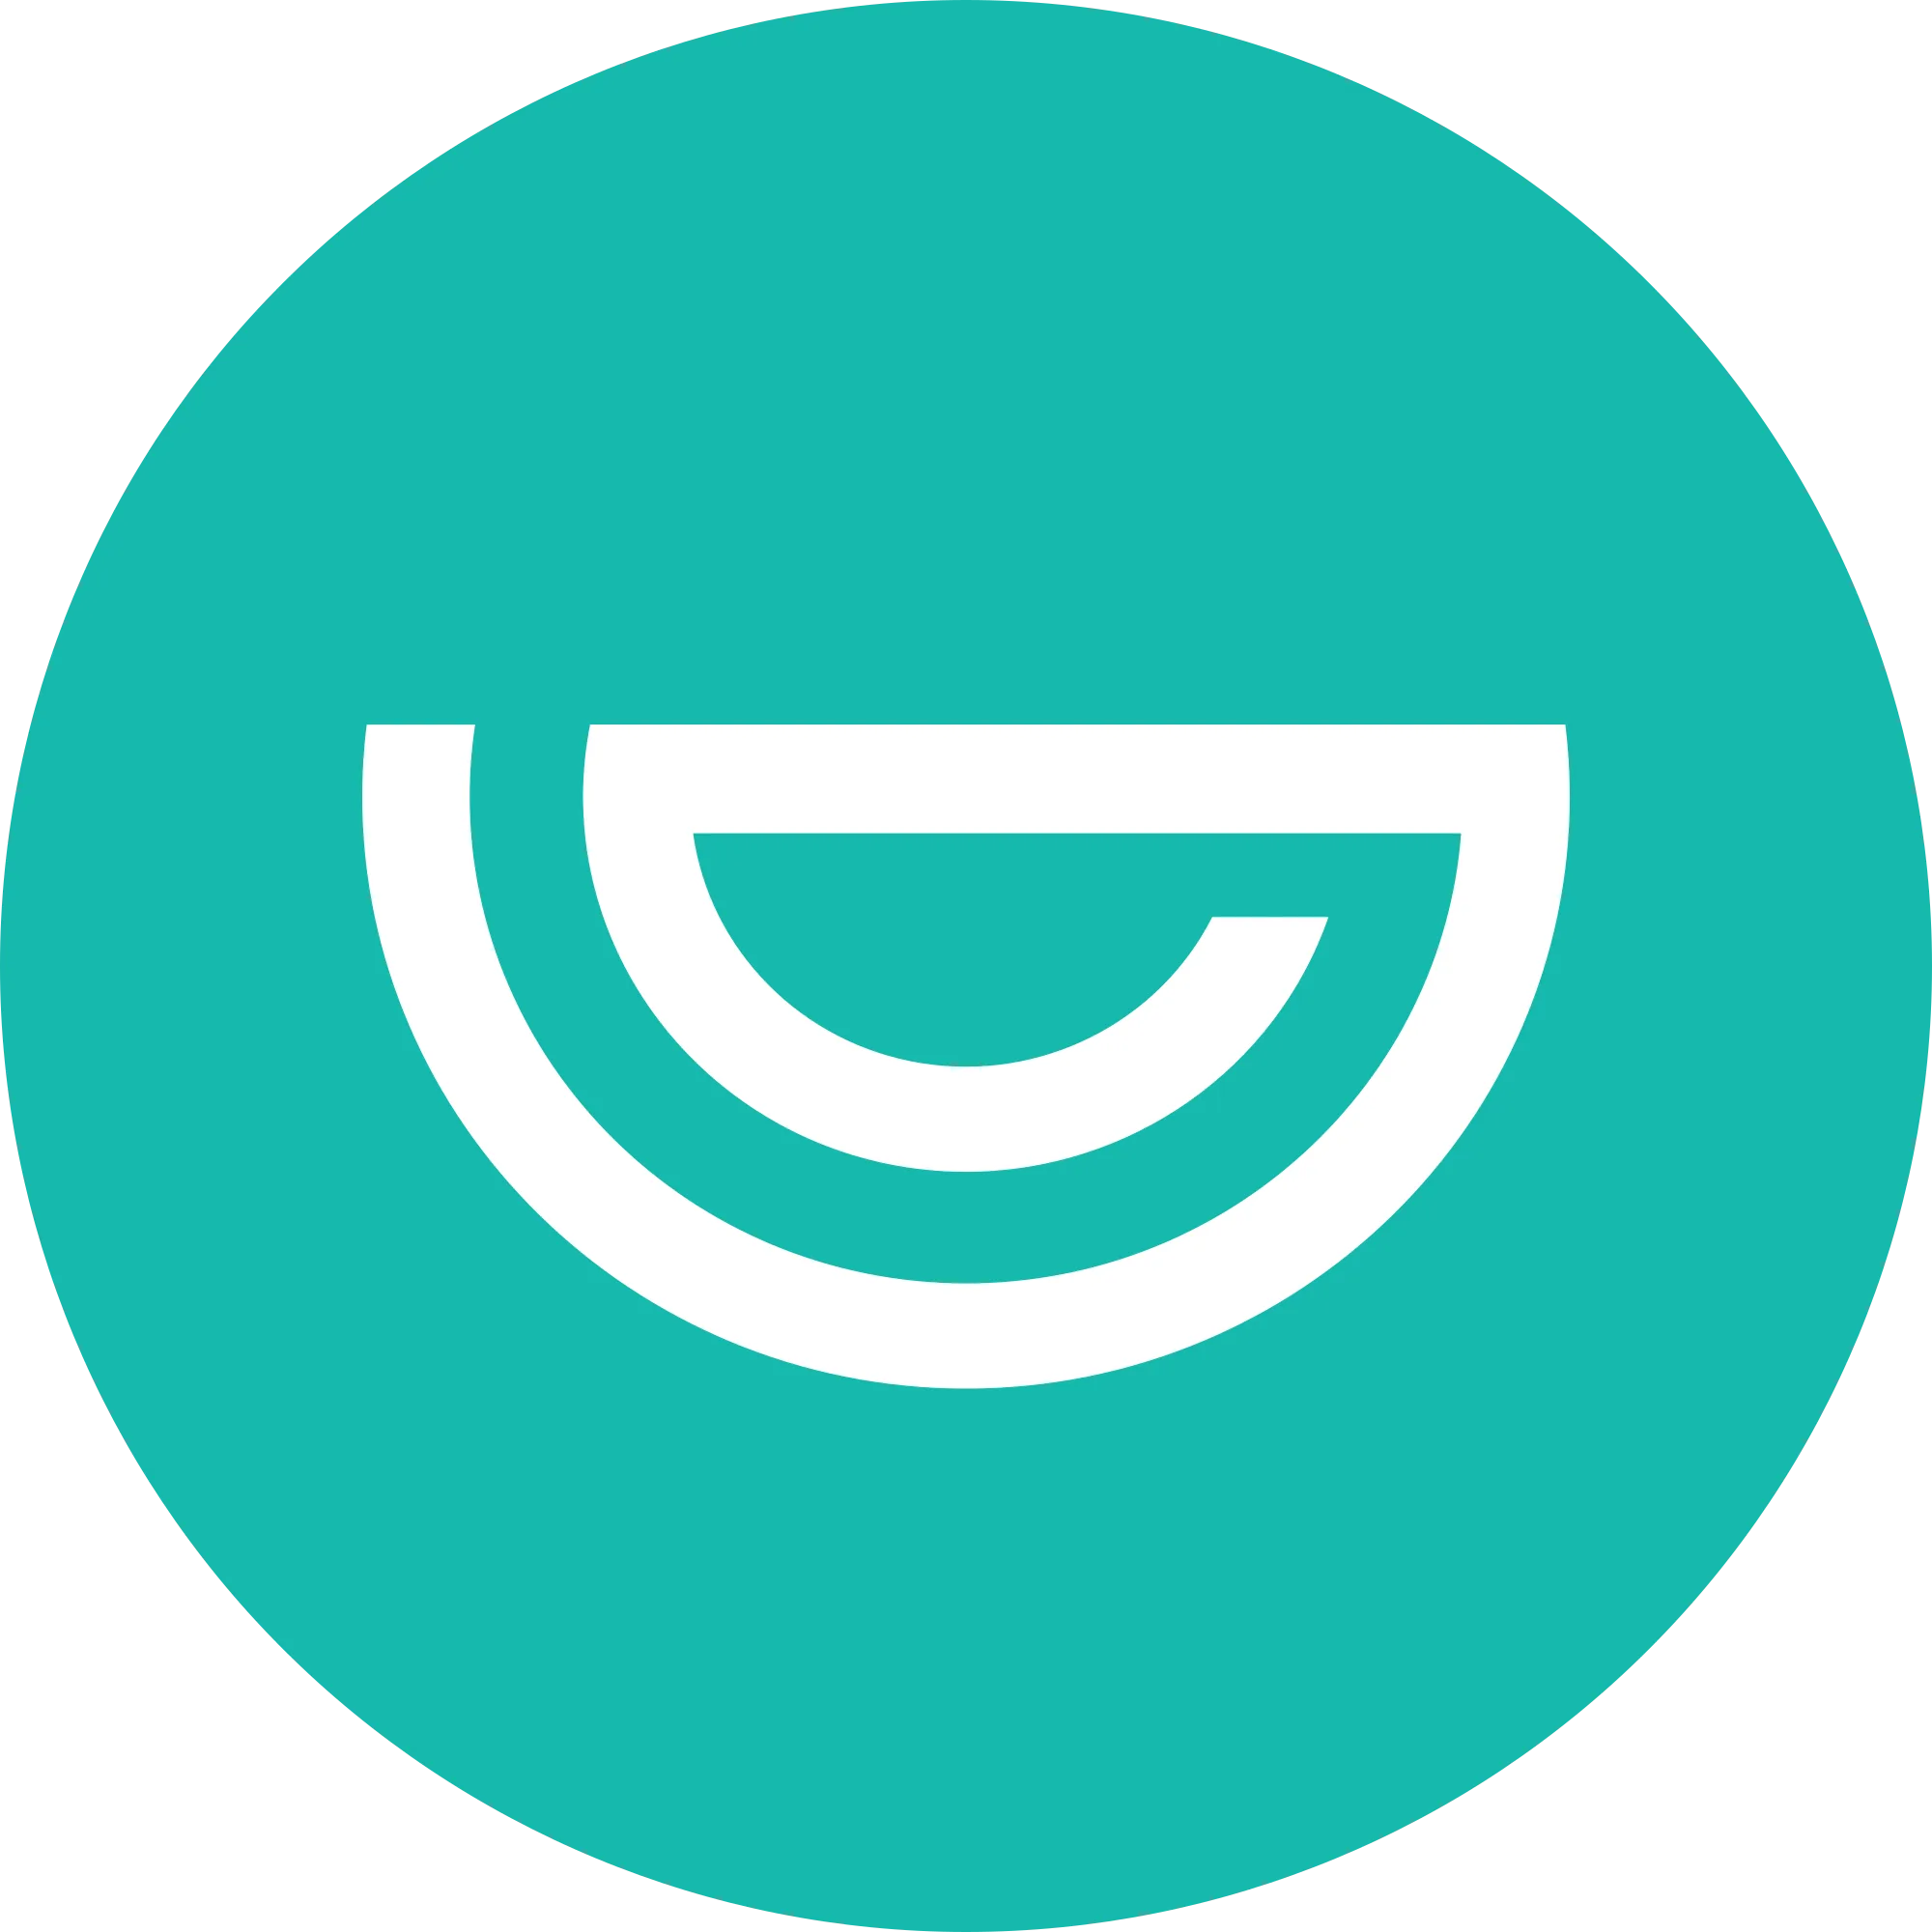 Genesis Vision logo in png format